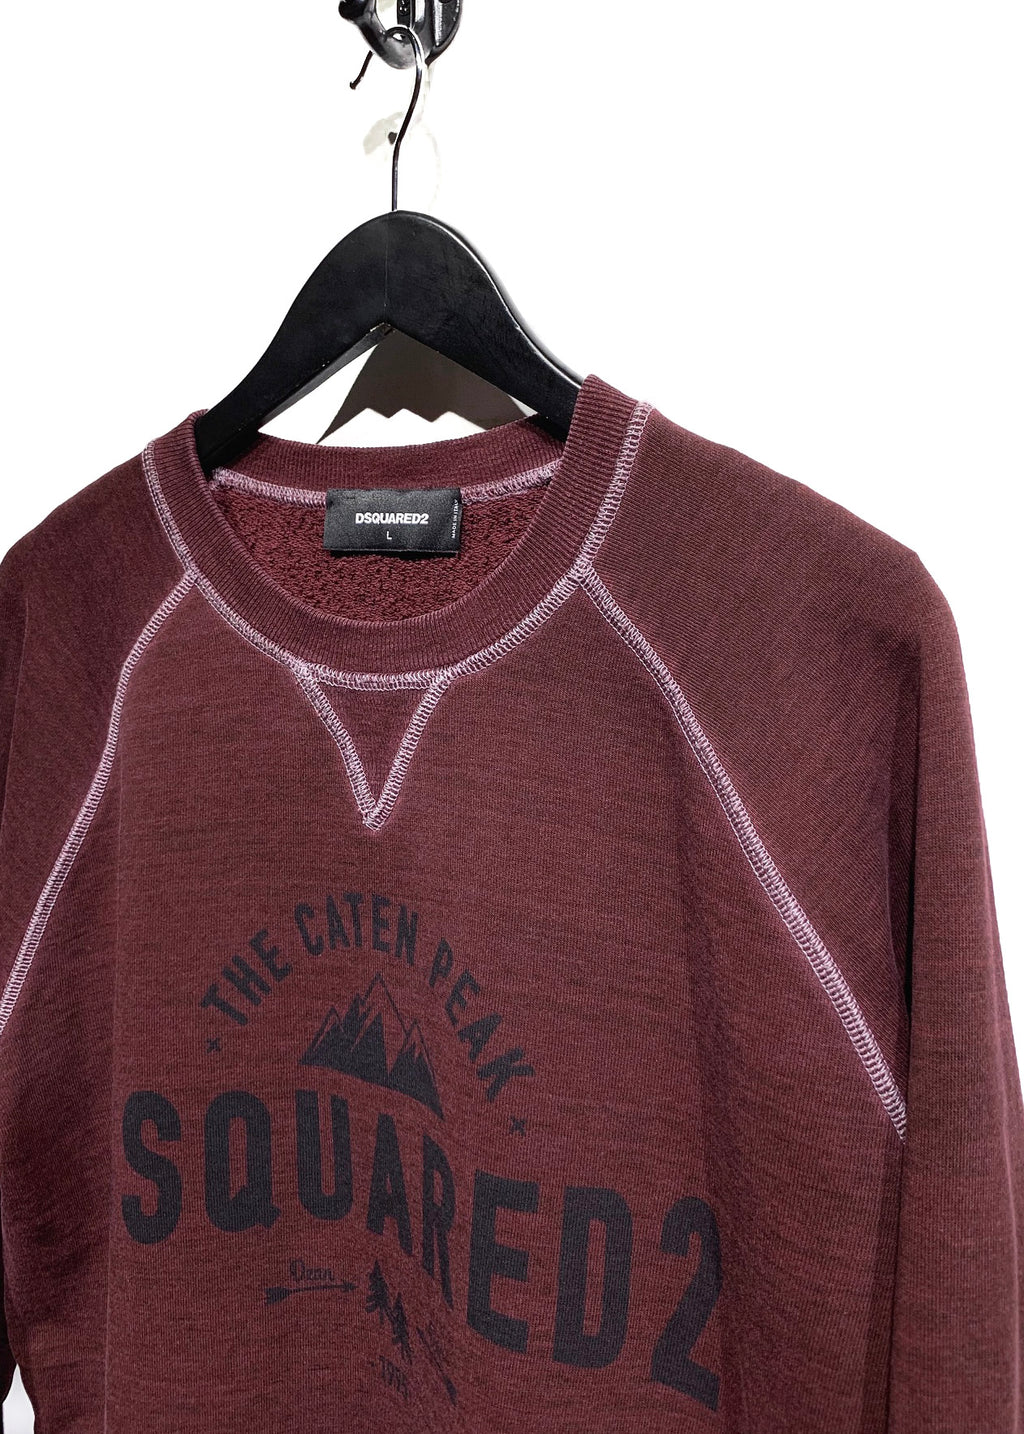 Dsquared2 Burgundy ''The Caten Peak'' Printed Sweatshirt